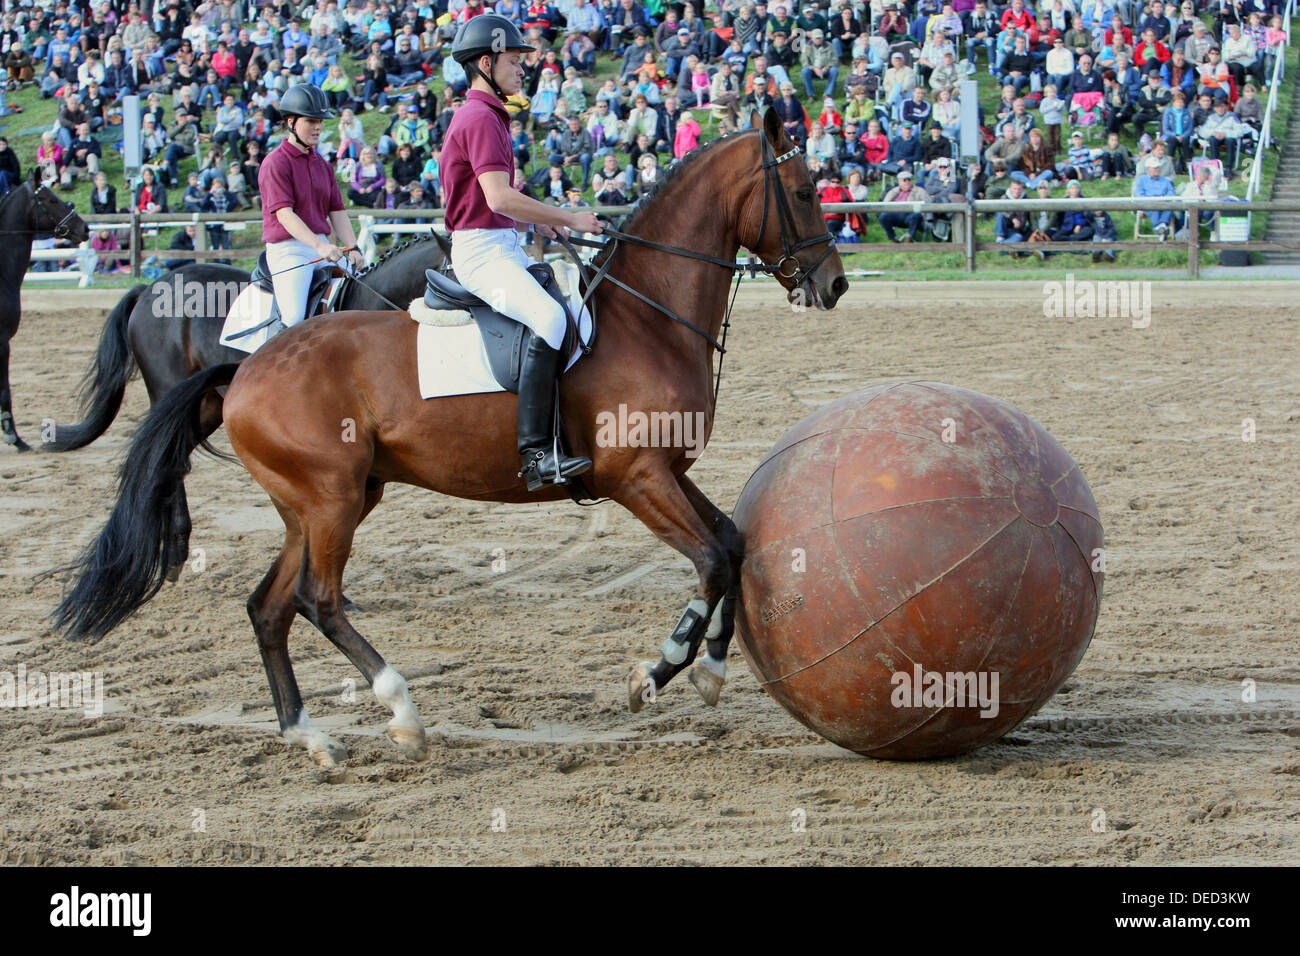 Moritzburg, Alemania, empujar el juego de pelota a caballo semental en el Desfile anual Foto de stock